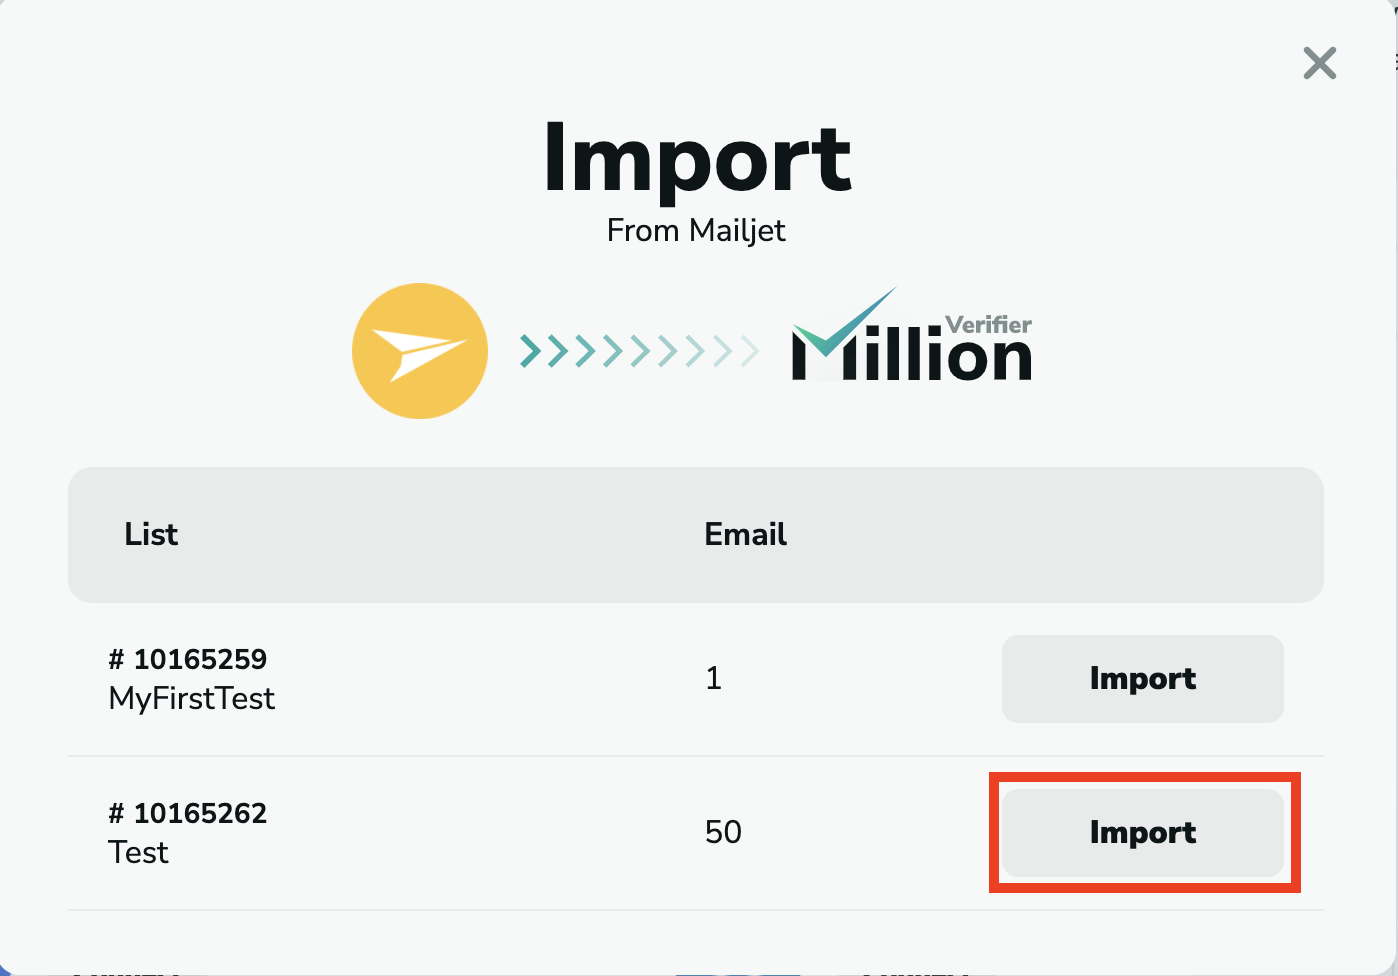 Mailjet import emails to MillionVerifier